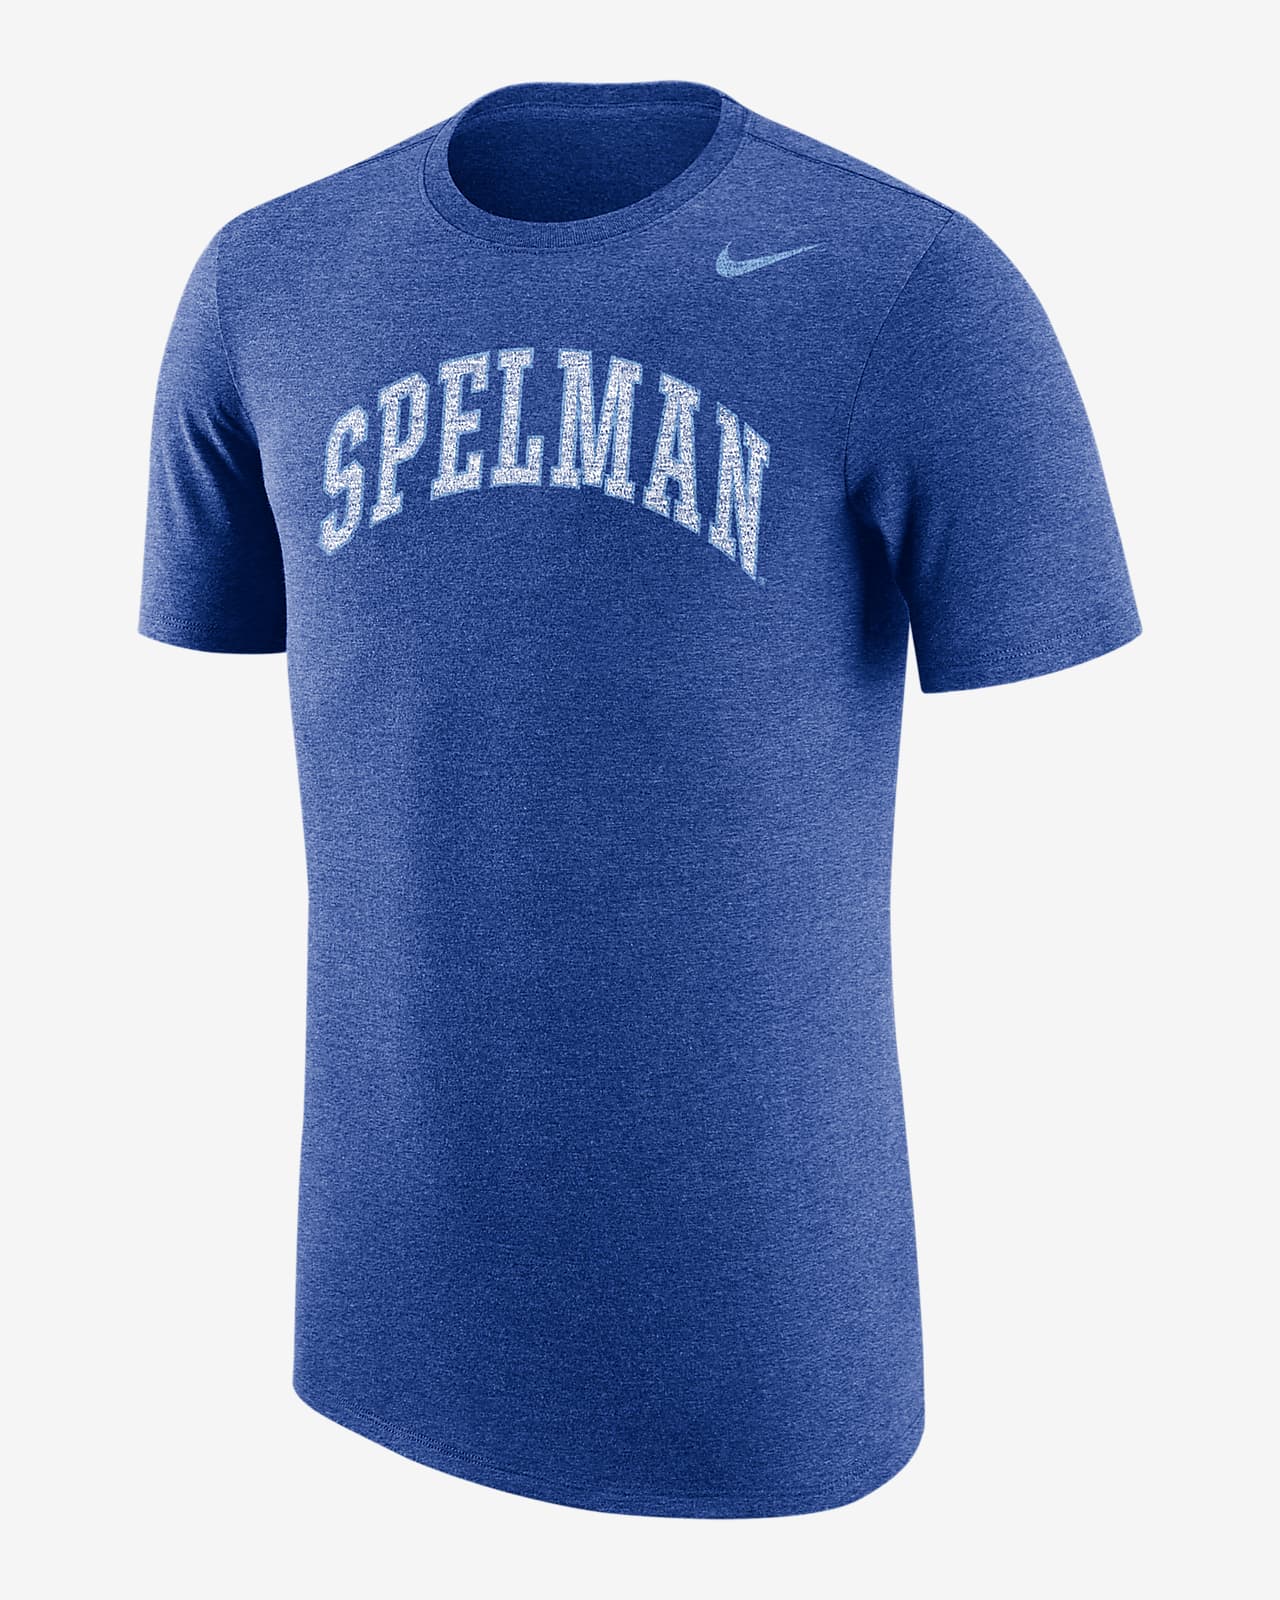 Nike College (Spelman) Men's T-Shirt